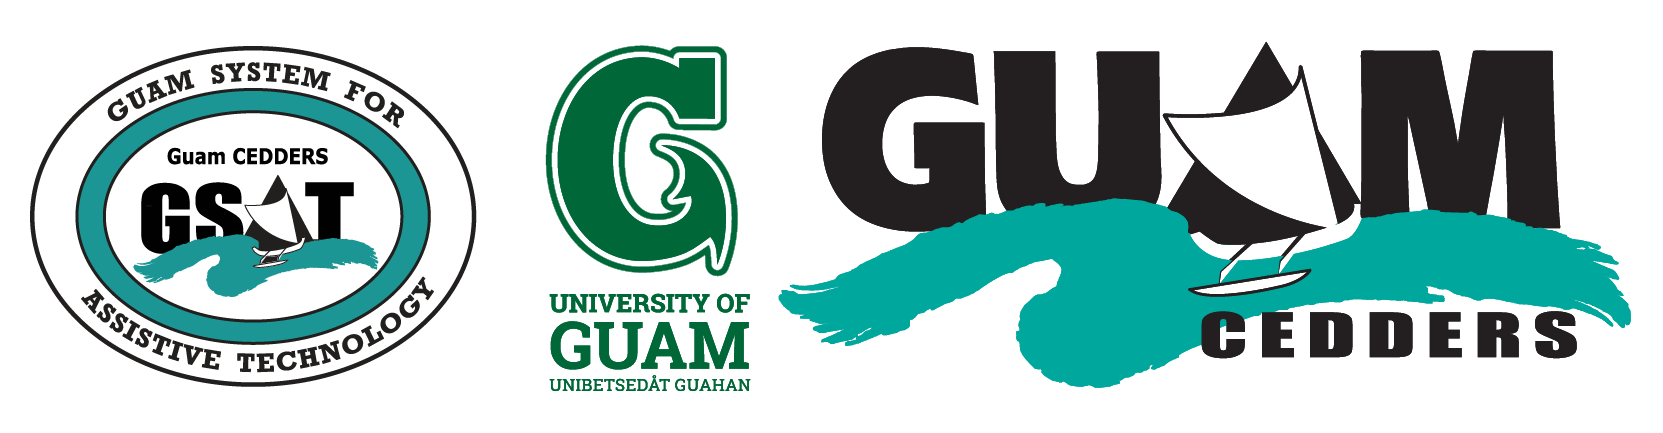 GSAT and Guam CEDDERS logo